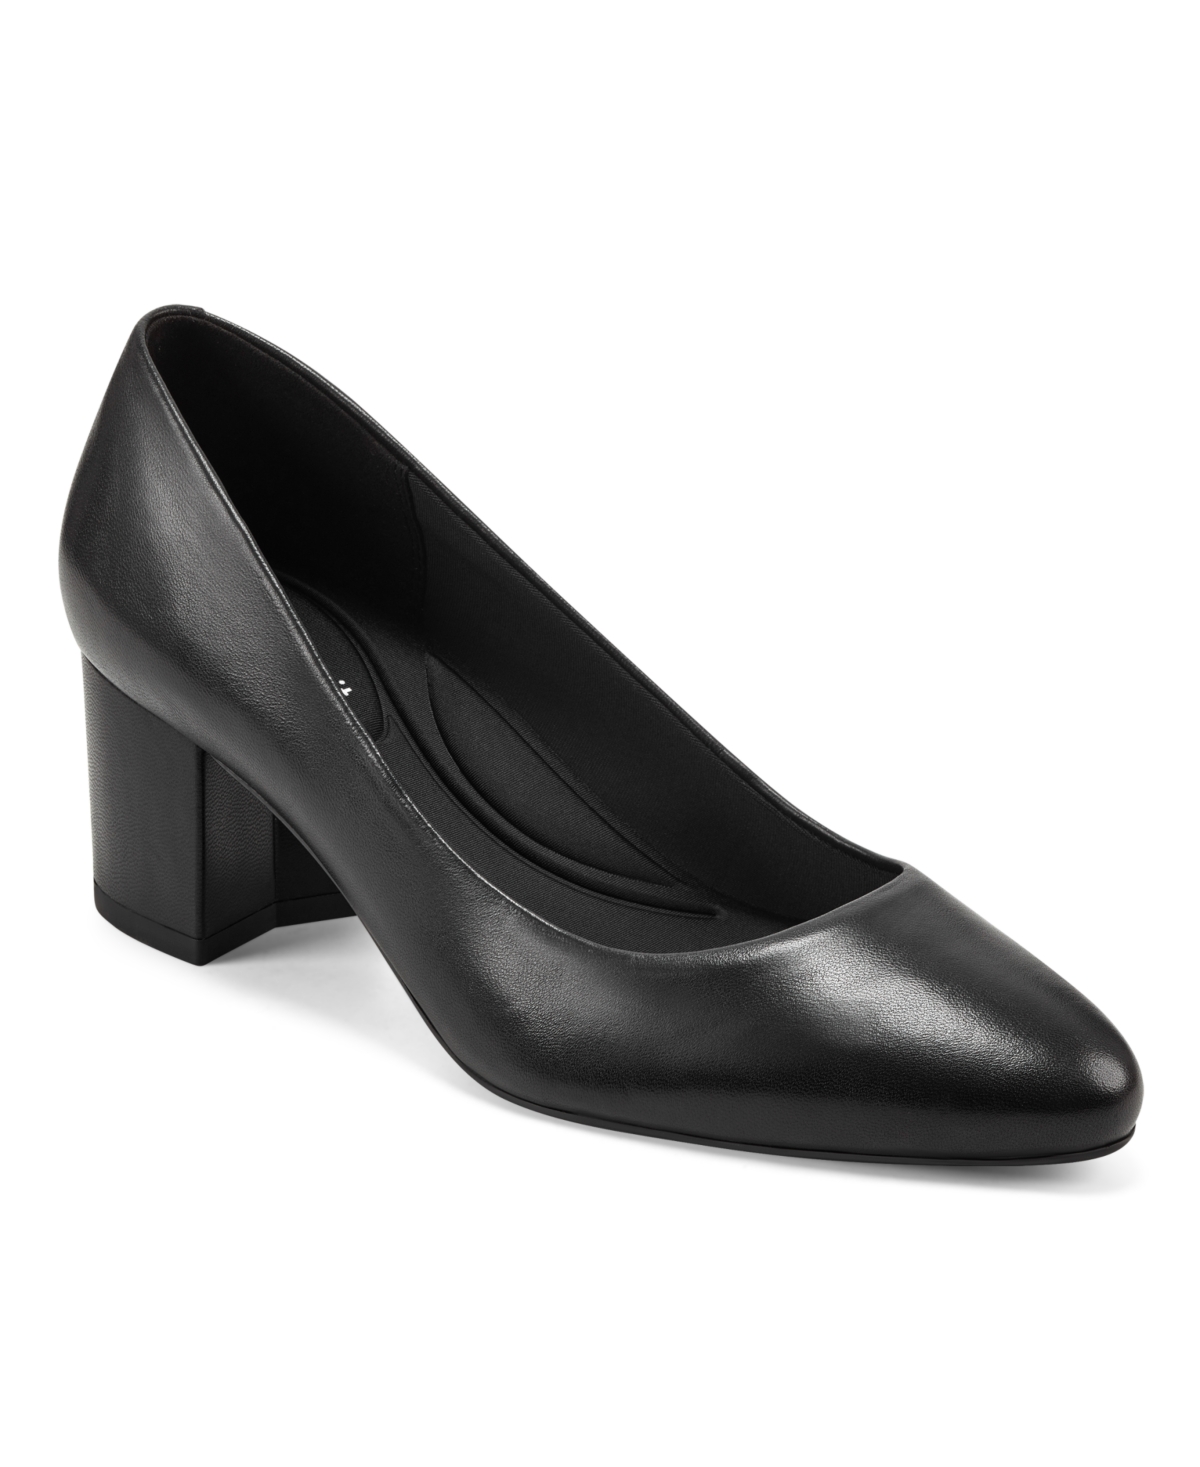 Women's Eflex Cosma Slip-on Block Heel Dress Pumps - Medium Natural Patent Leather